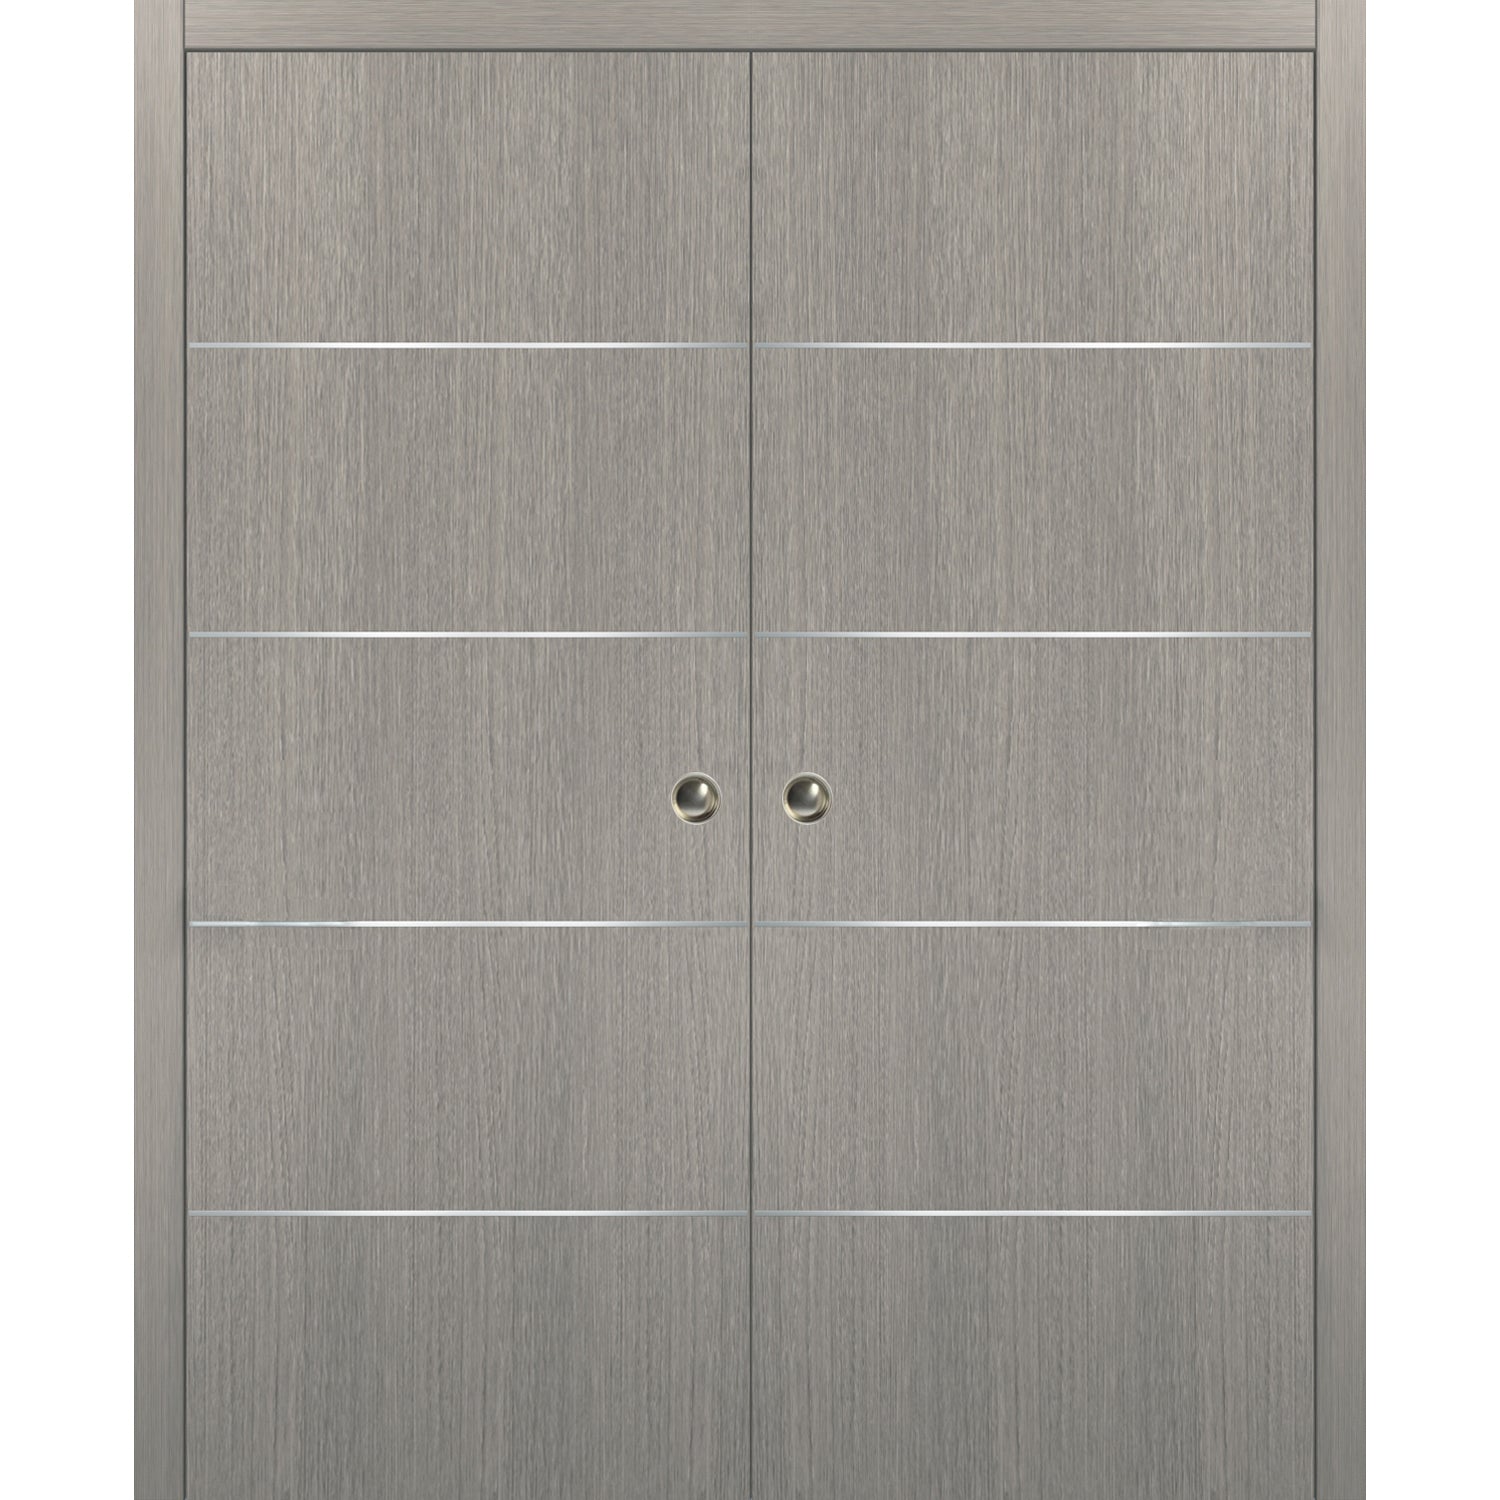 SARTODOORS Double Pocket Doors 56 x 80 with Frames | Planum 0020 Grey Oak | Rail Hardware | Wood Sliding Closet